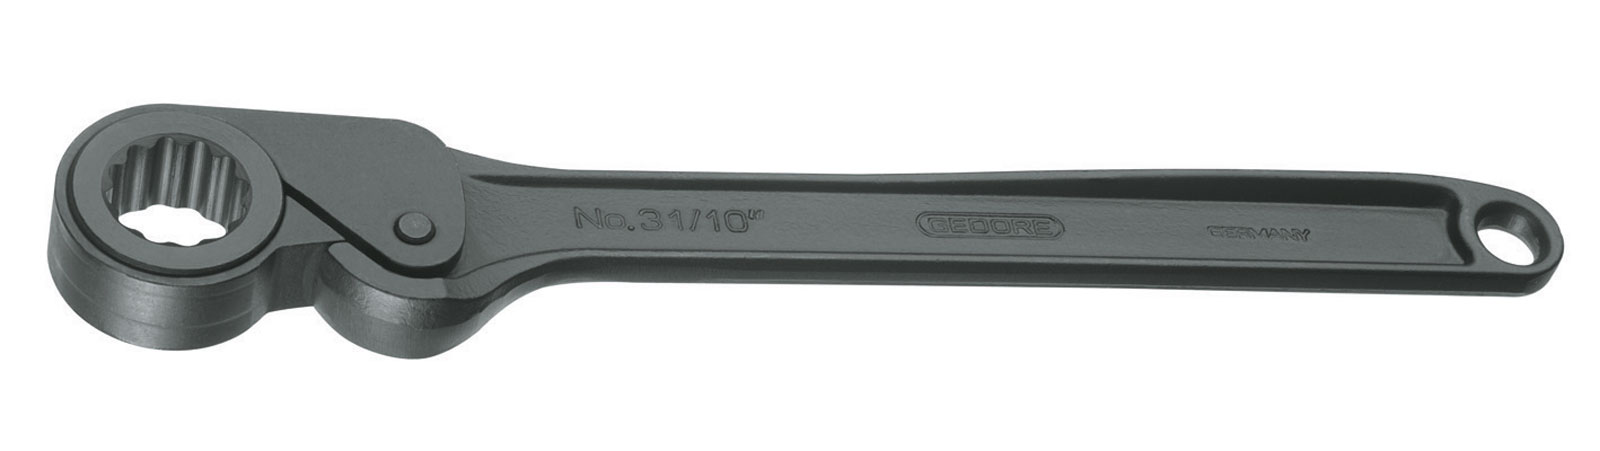 Image de 31 KR 40-80 Freilaufknarre 40" mit Ring UD-Profil 80 mm